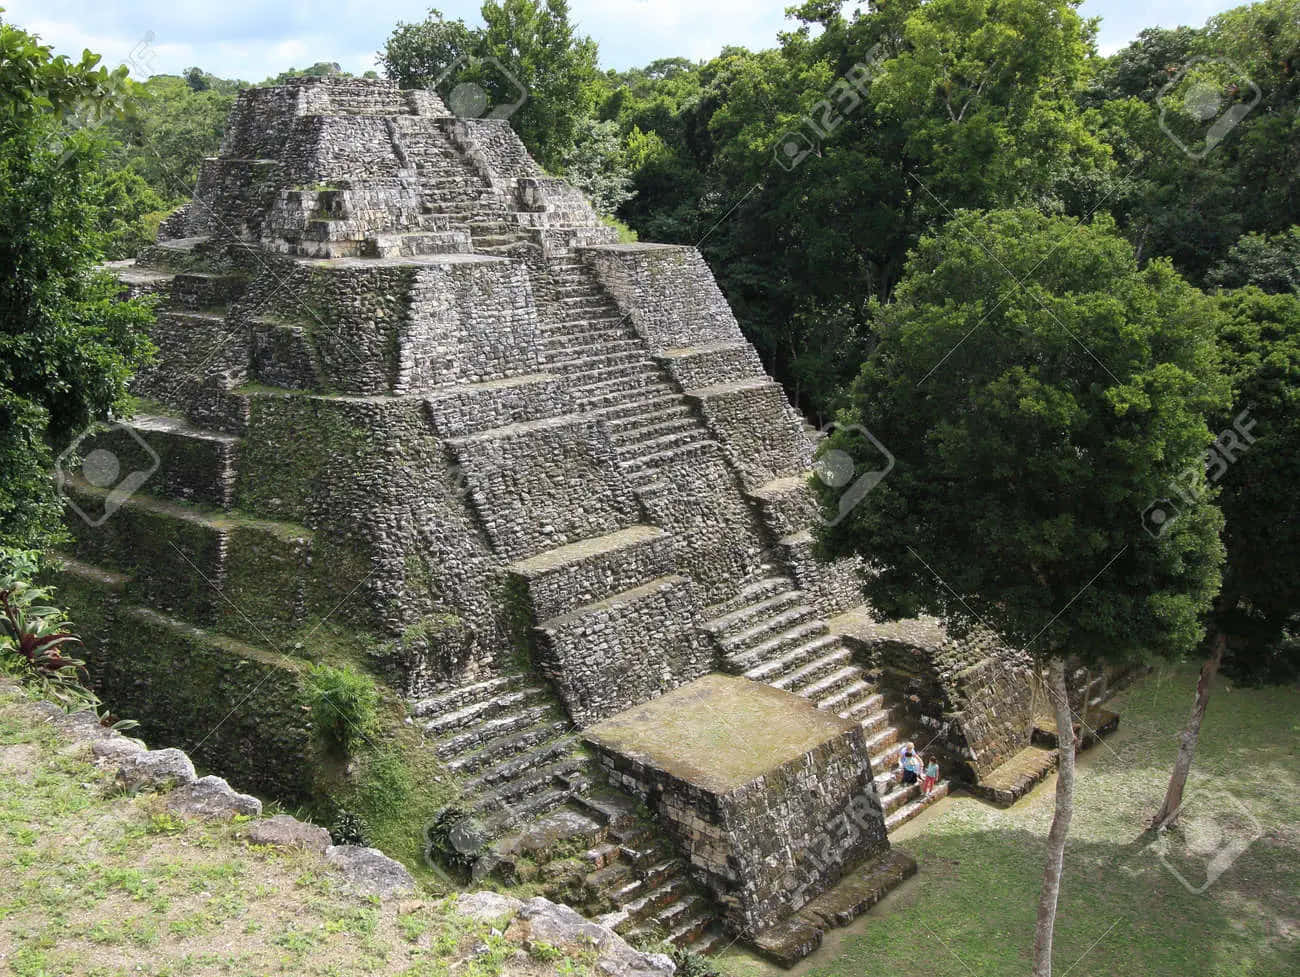 Caption: Sunlit View Of The Ancient Mayan Ruins Of Copan Wallpaper